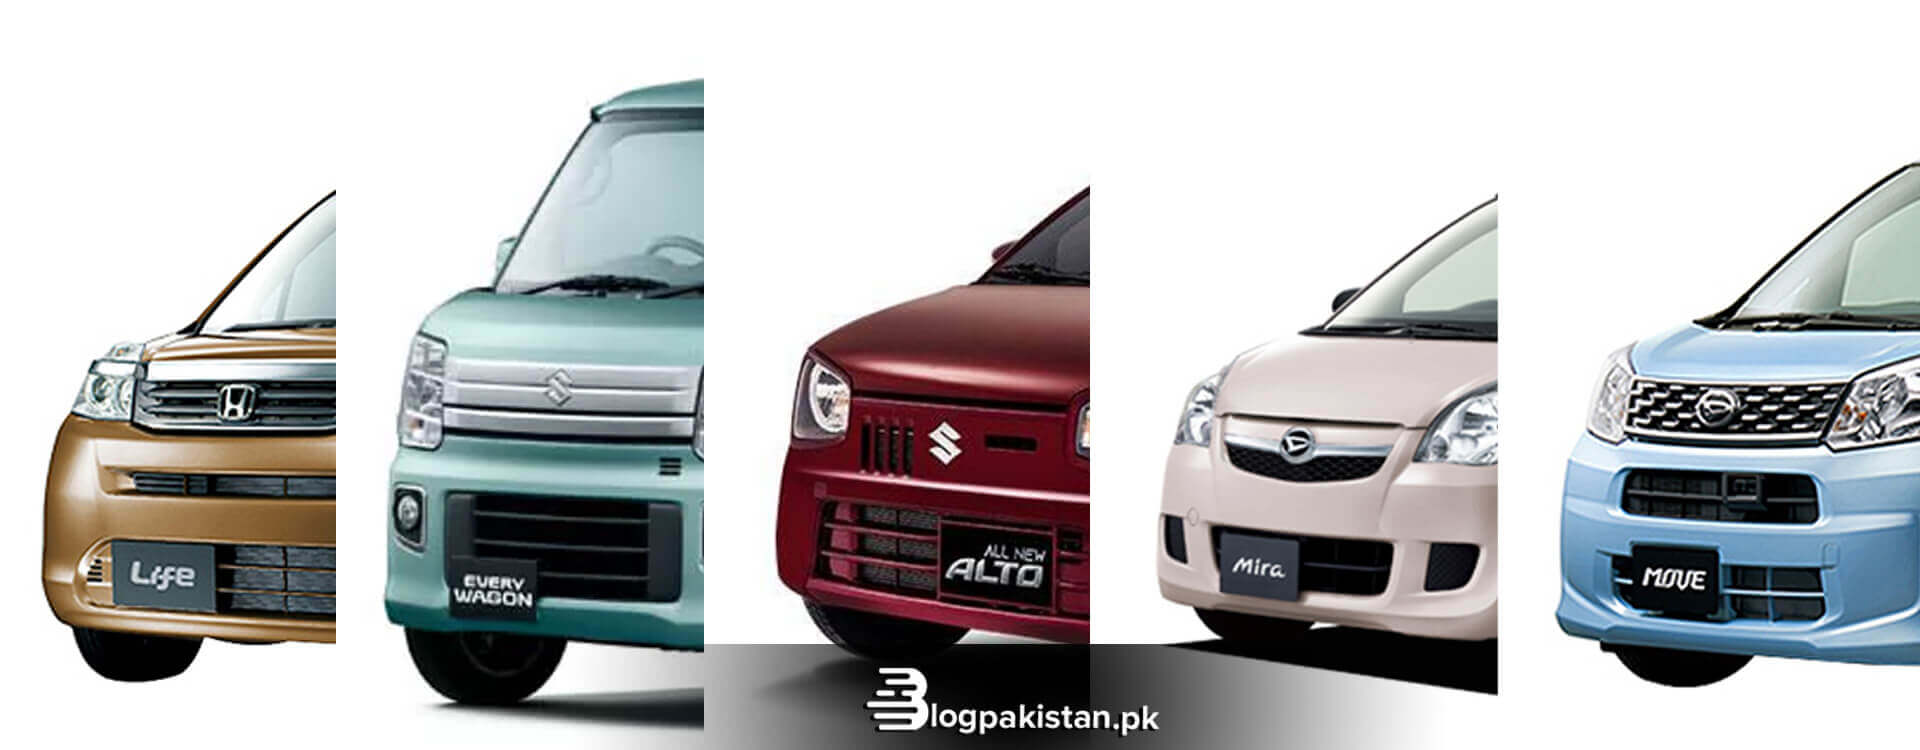 660cc Cars in Pakistan: Prices, Mileage, & Specs